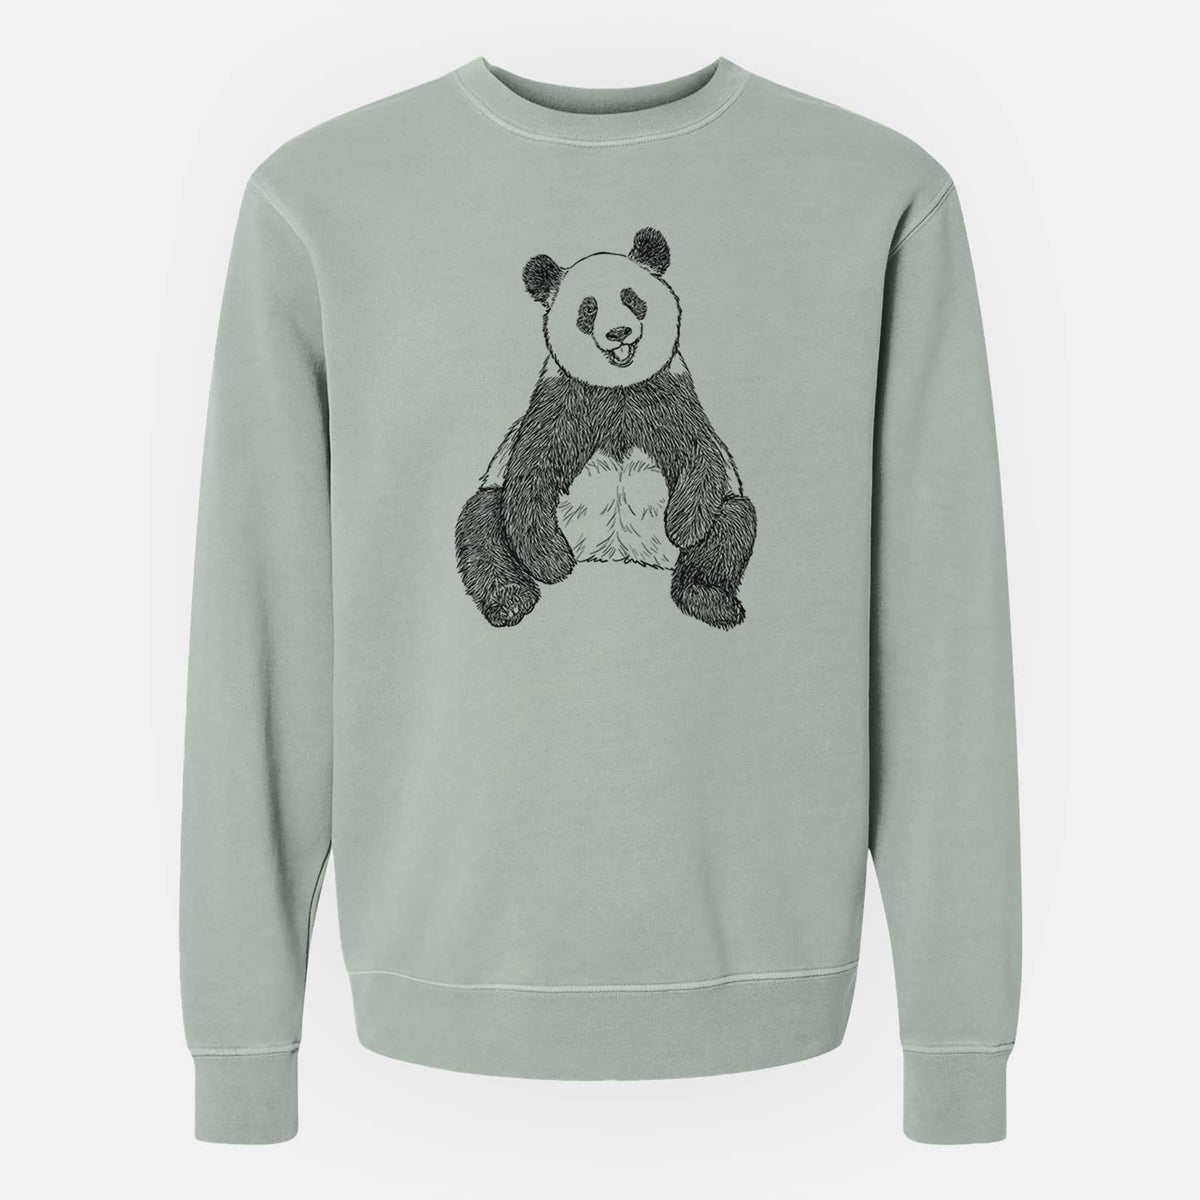 Ailuropoda melanoleuca - Giant Panda Sitting - Unisex Pigment Dyed Crew Sweatshirt